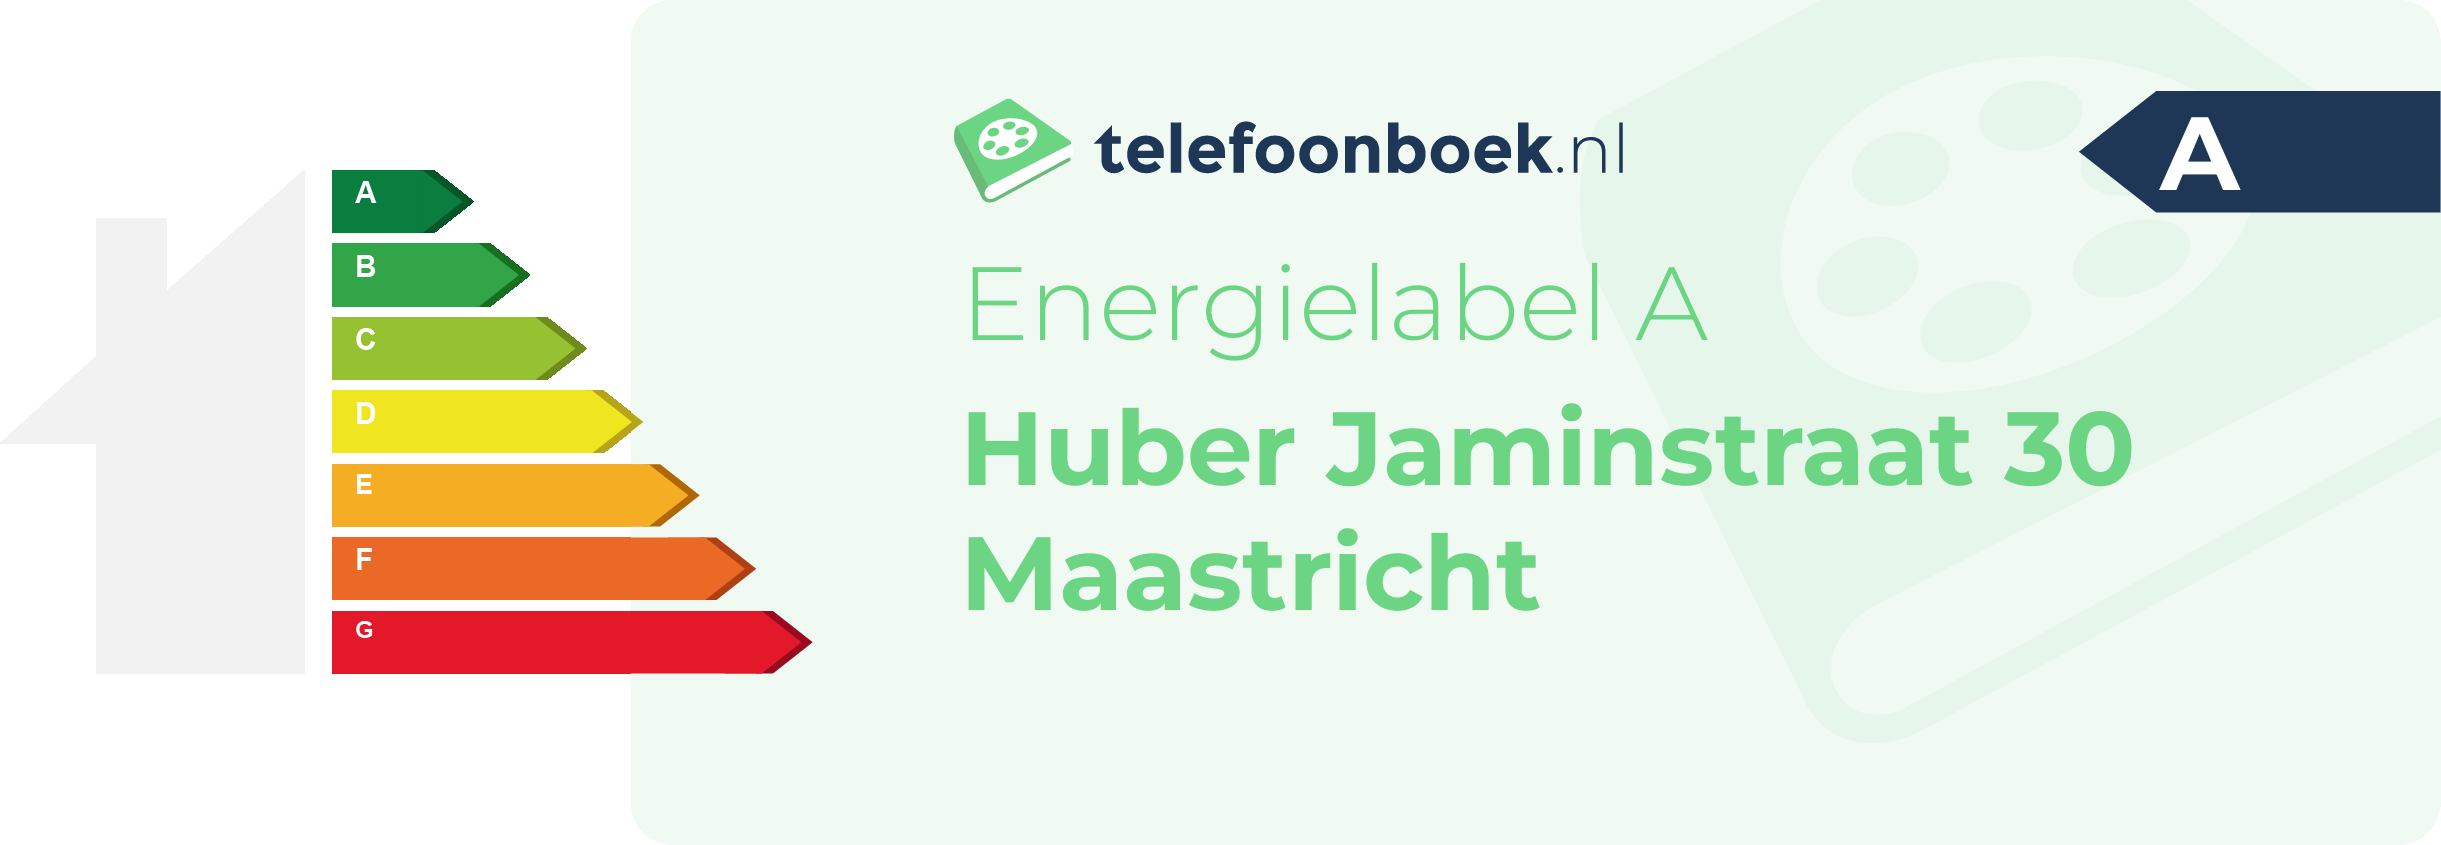 Energielabel Huber Jaminstraat 30 Maastricht